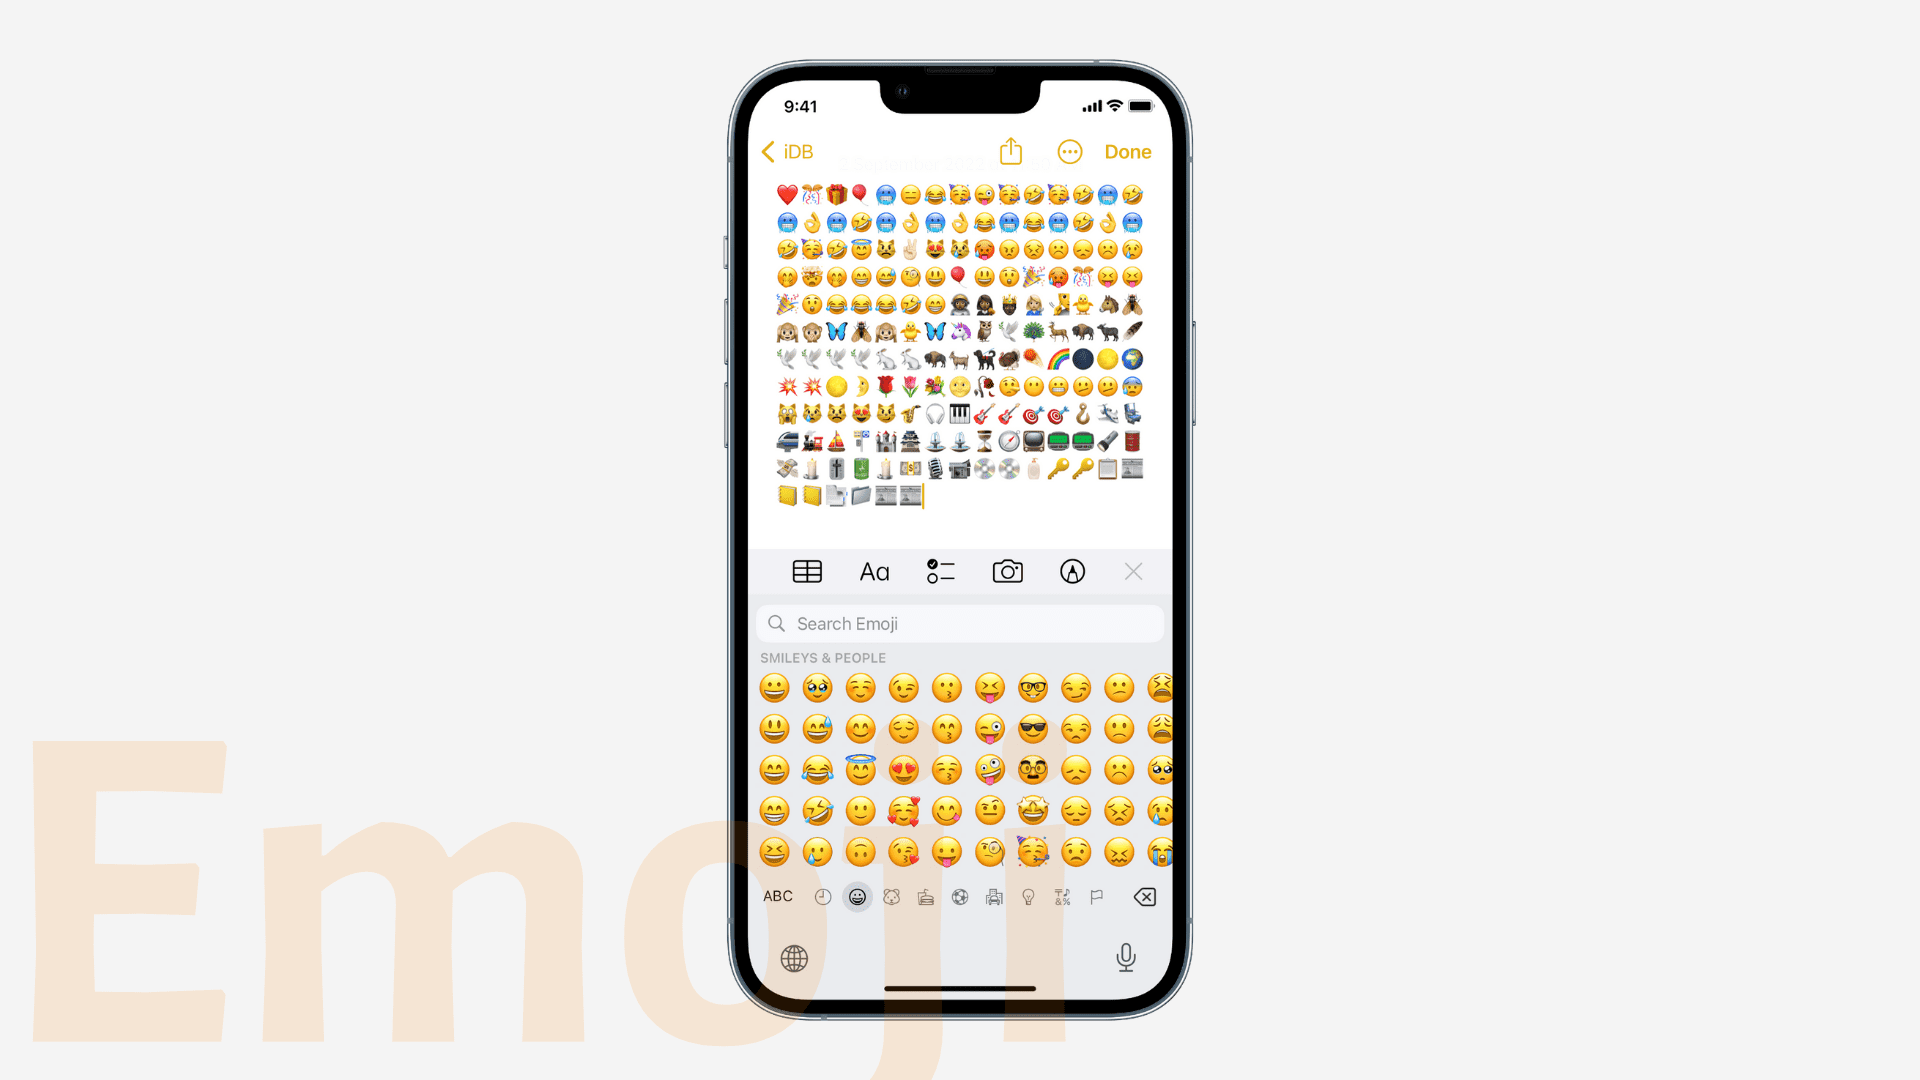 Improvements to Emoji in iOS 16